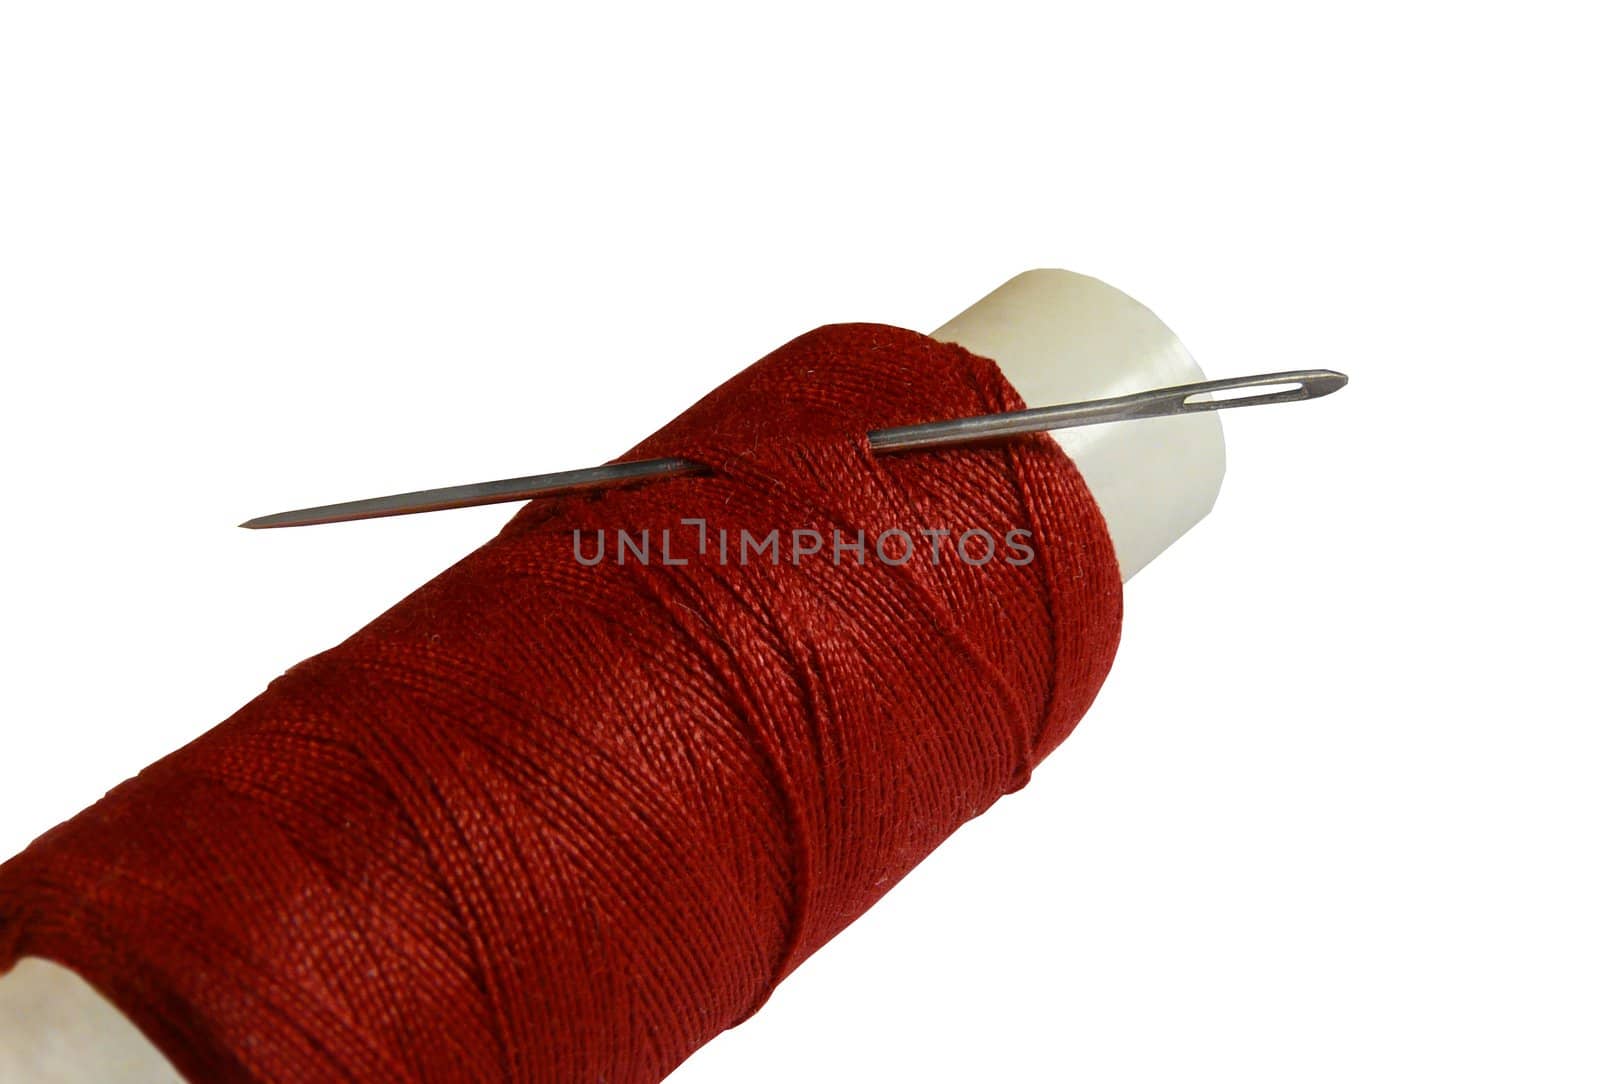 Thread and needle